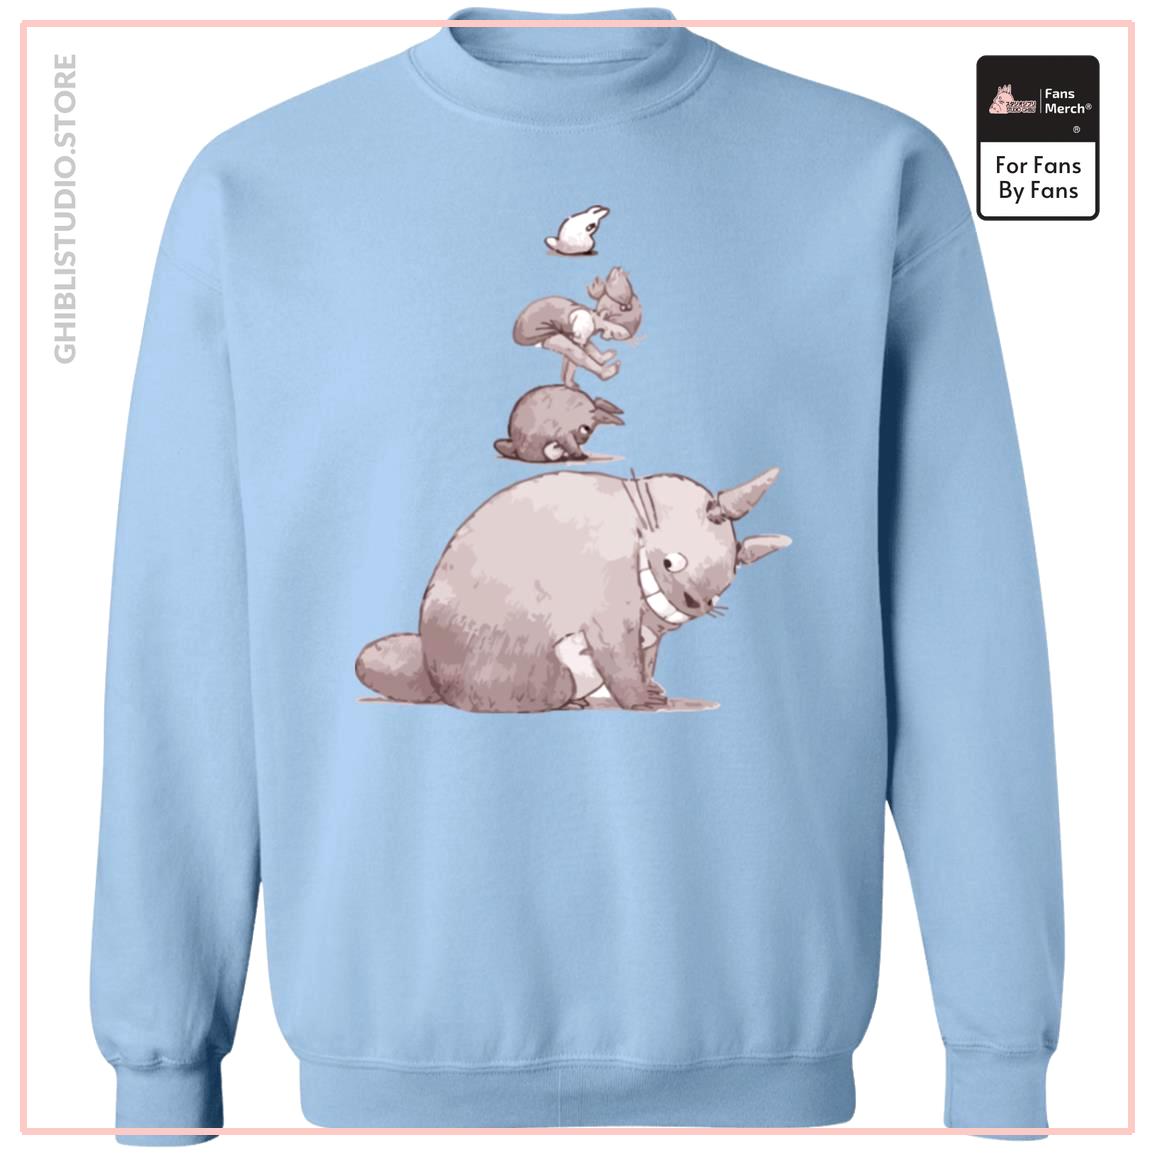 Totoro - Jump over the cow playing Sweatshirt | Ghibli Studio Store